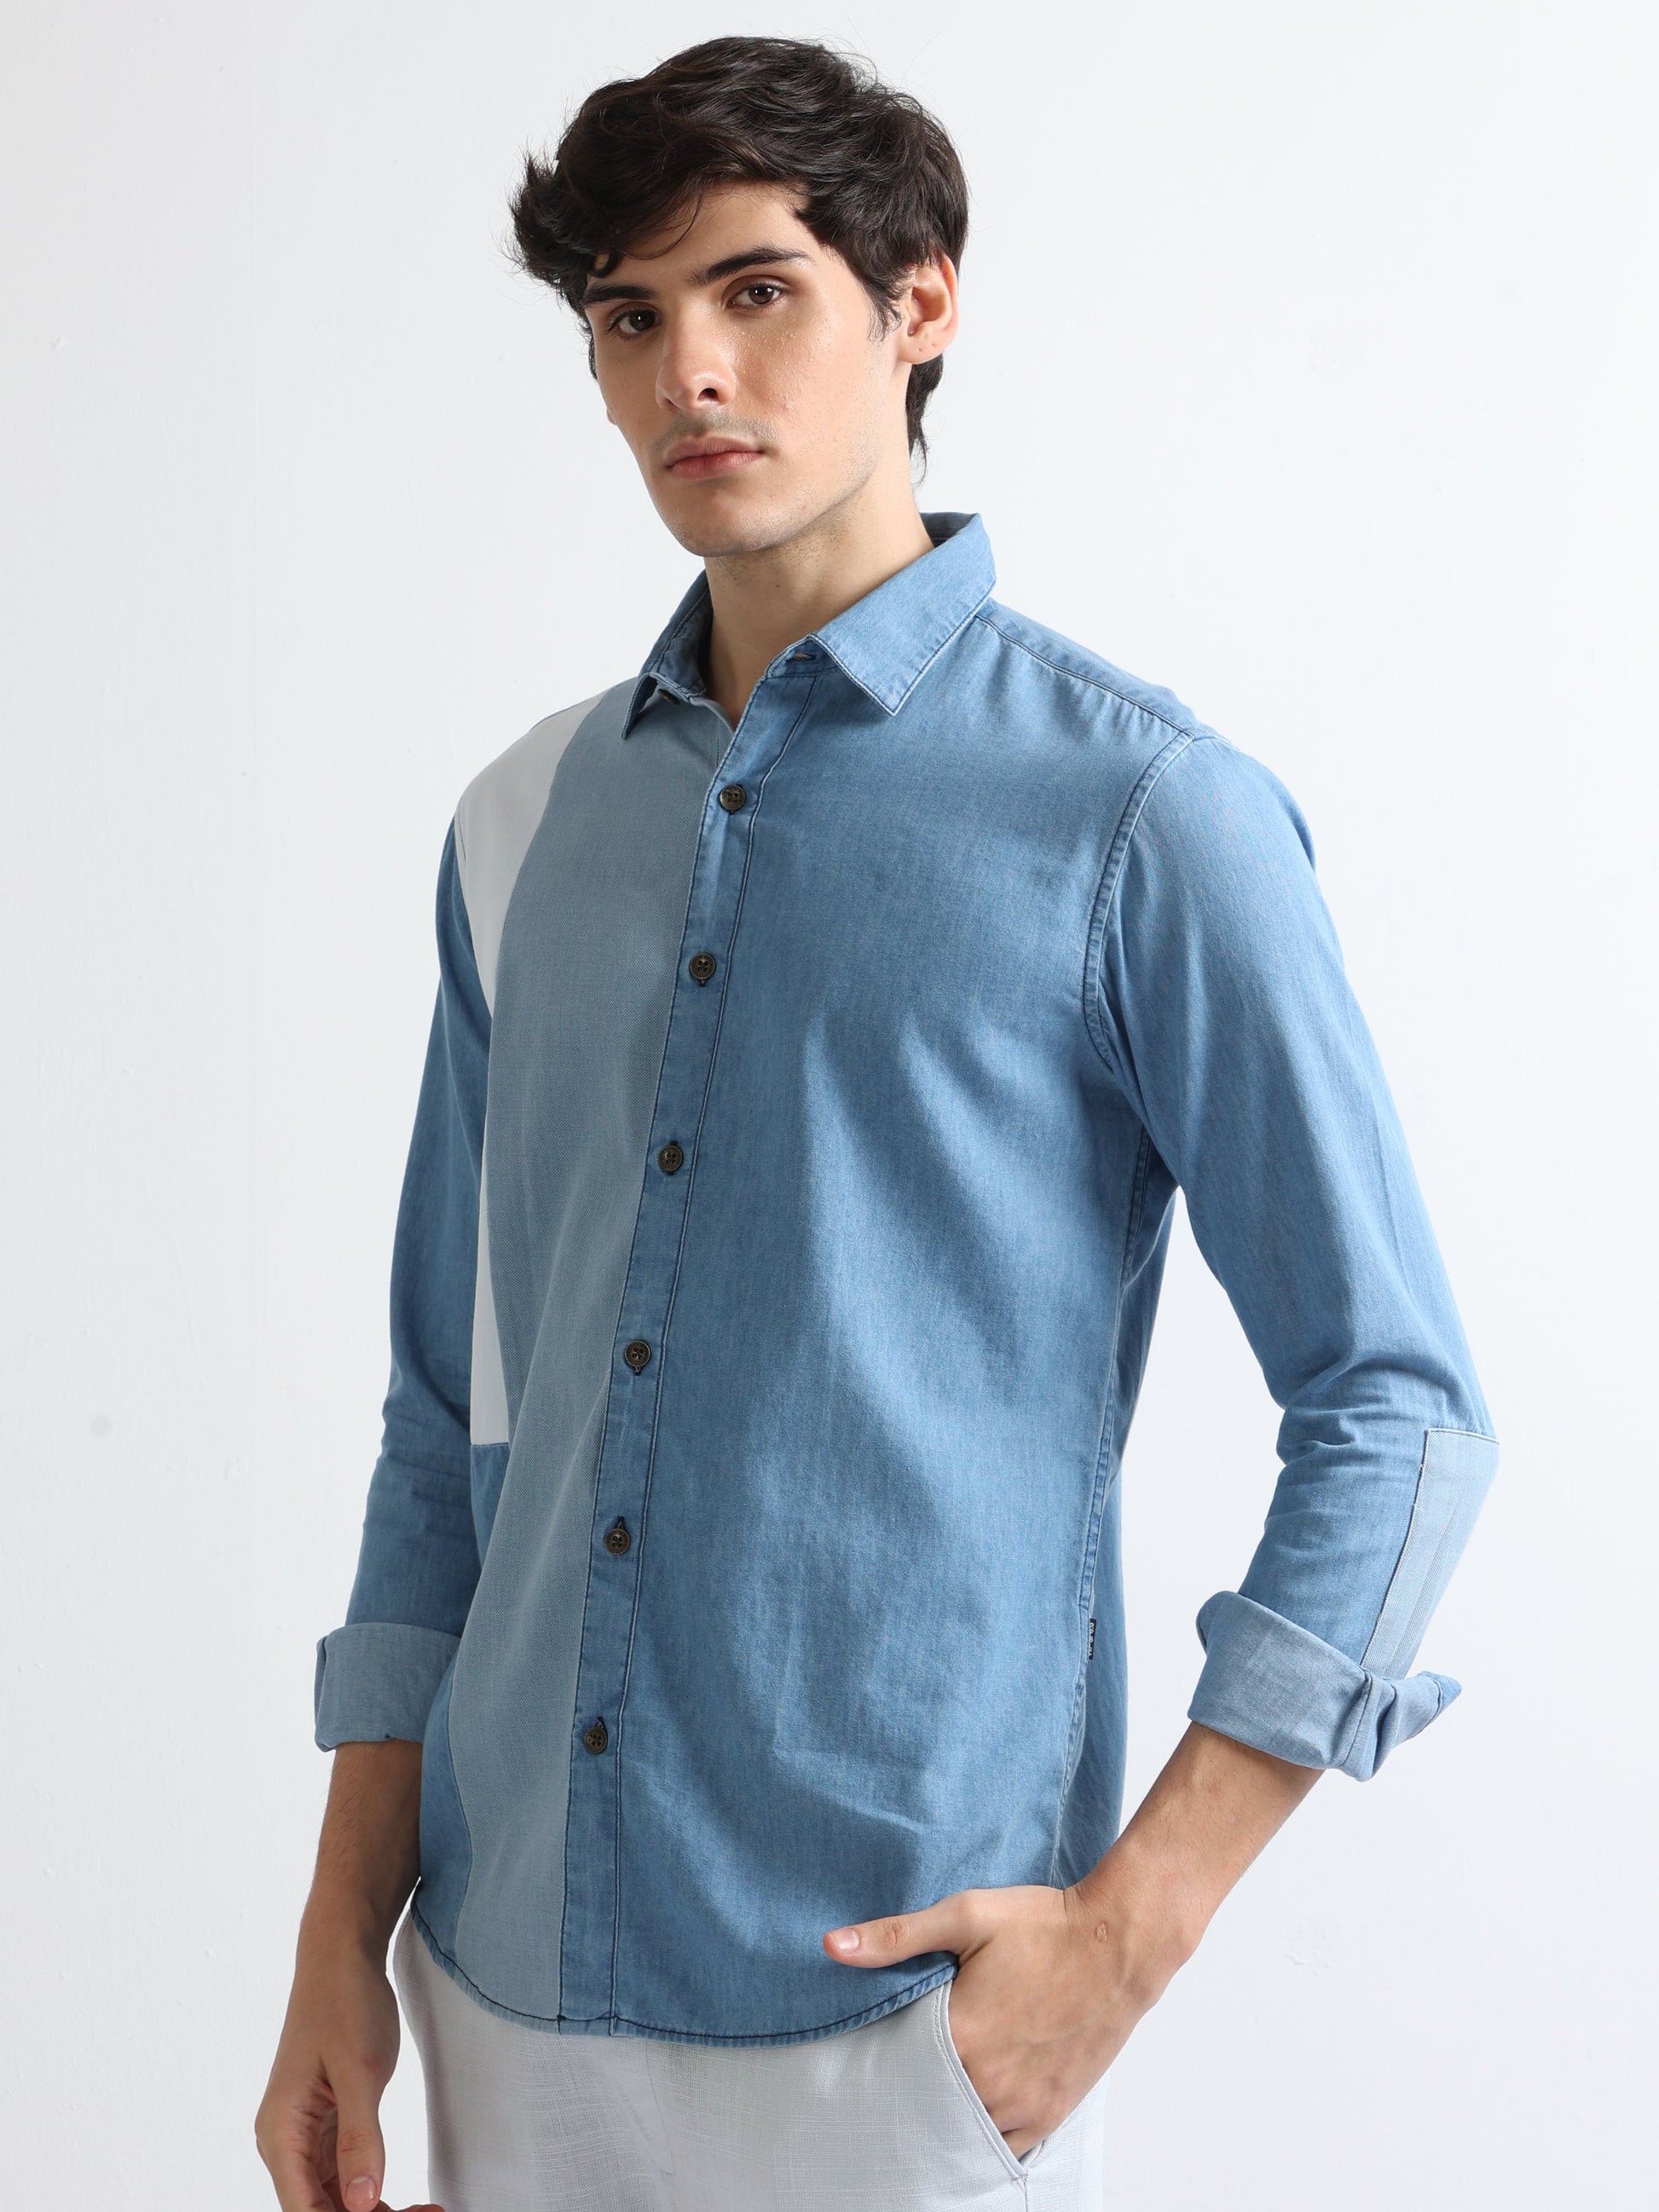 Buy Casual Color Block Ice Blue Denim Shirt Online.